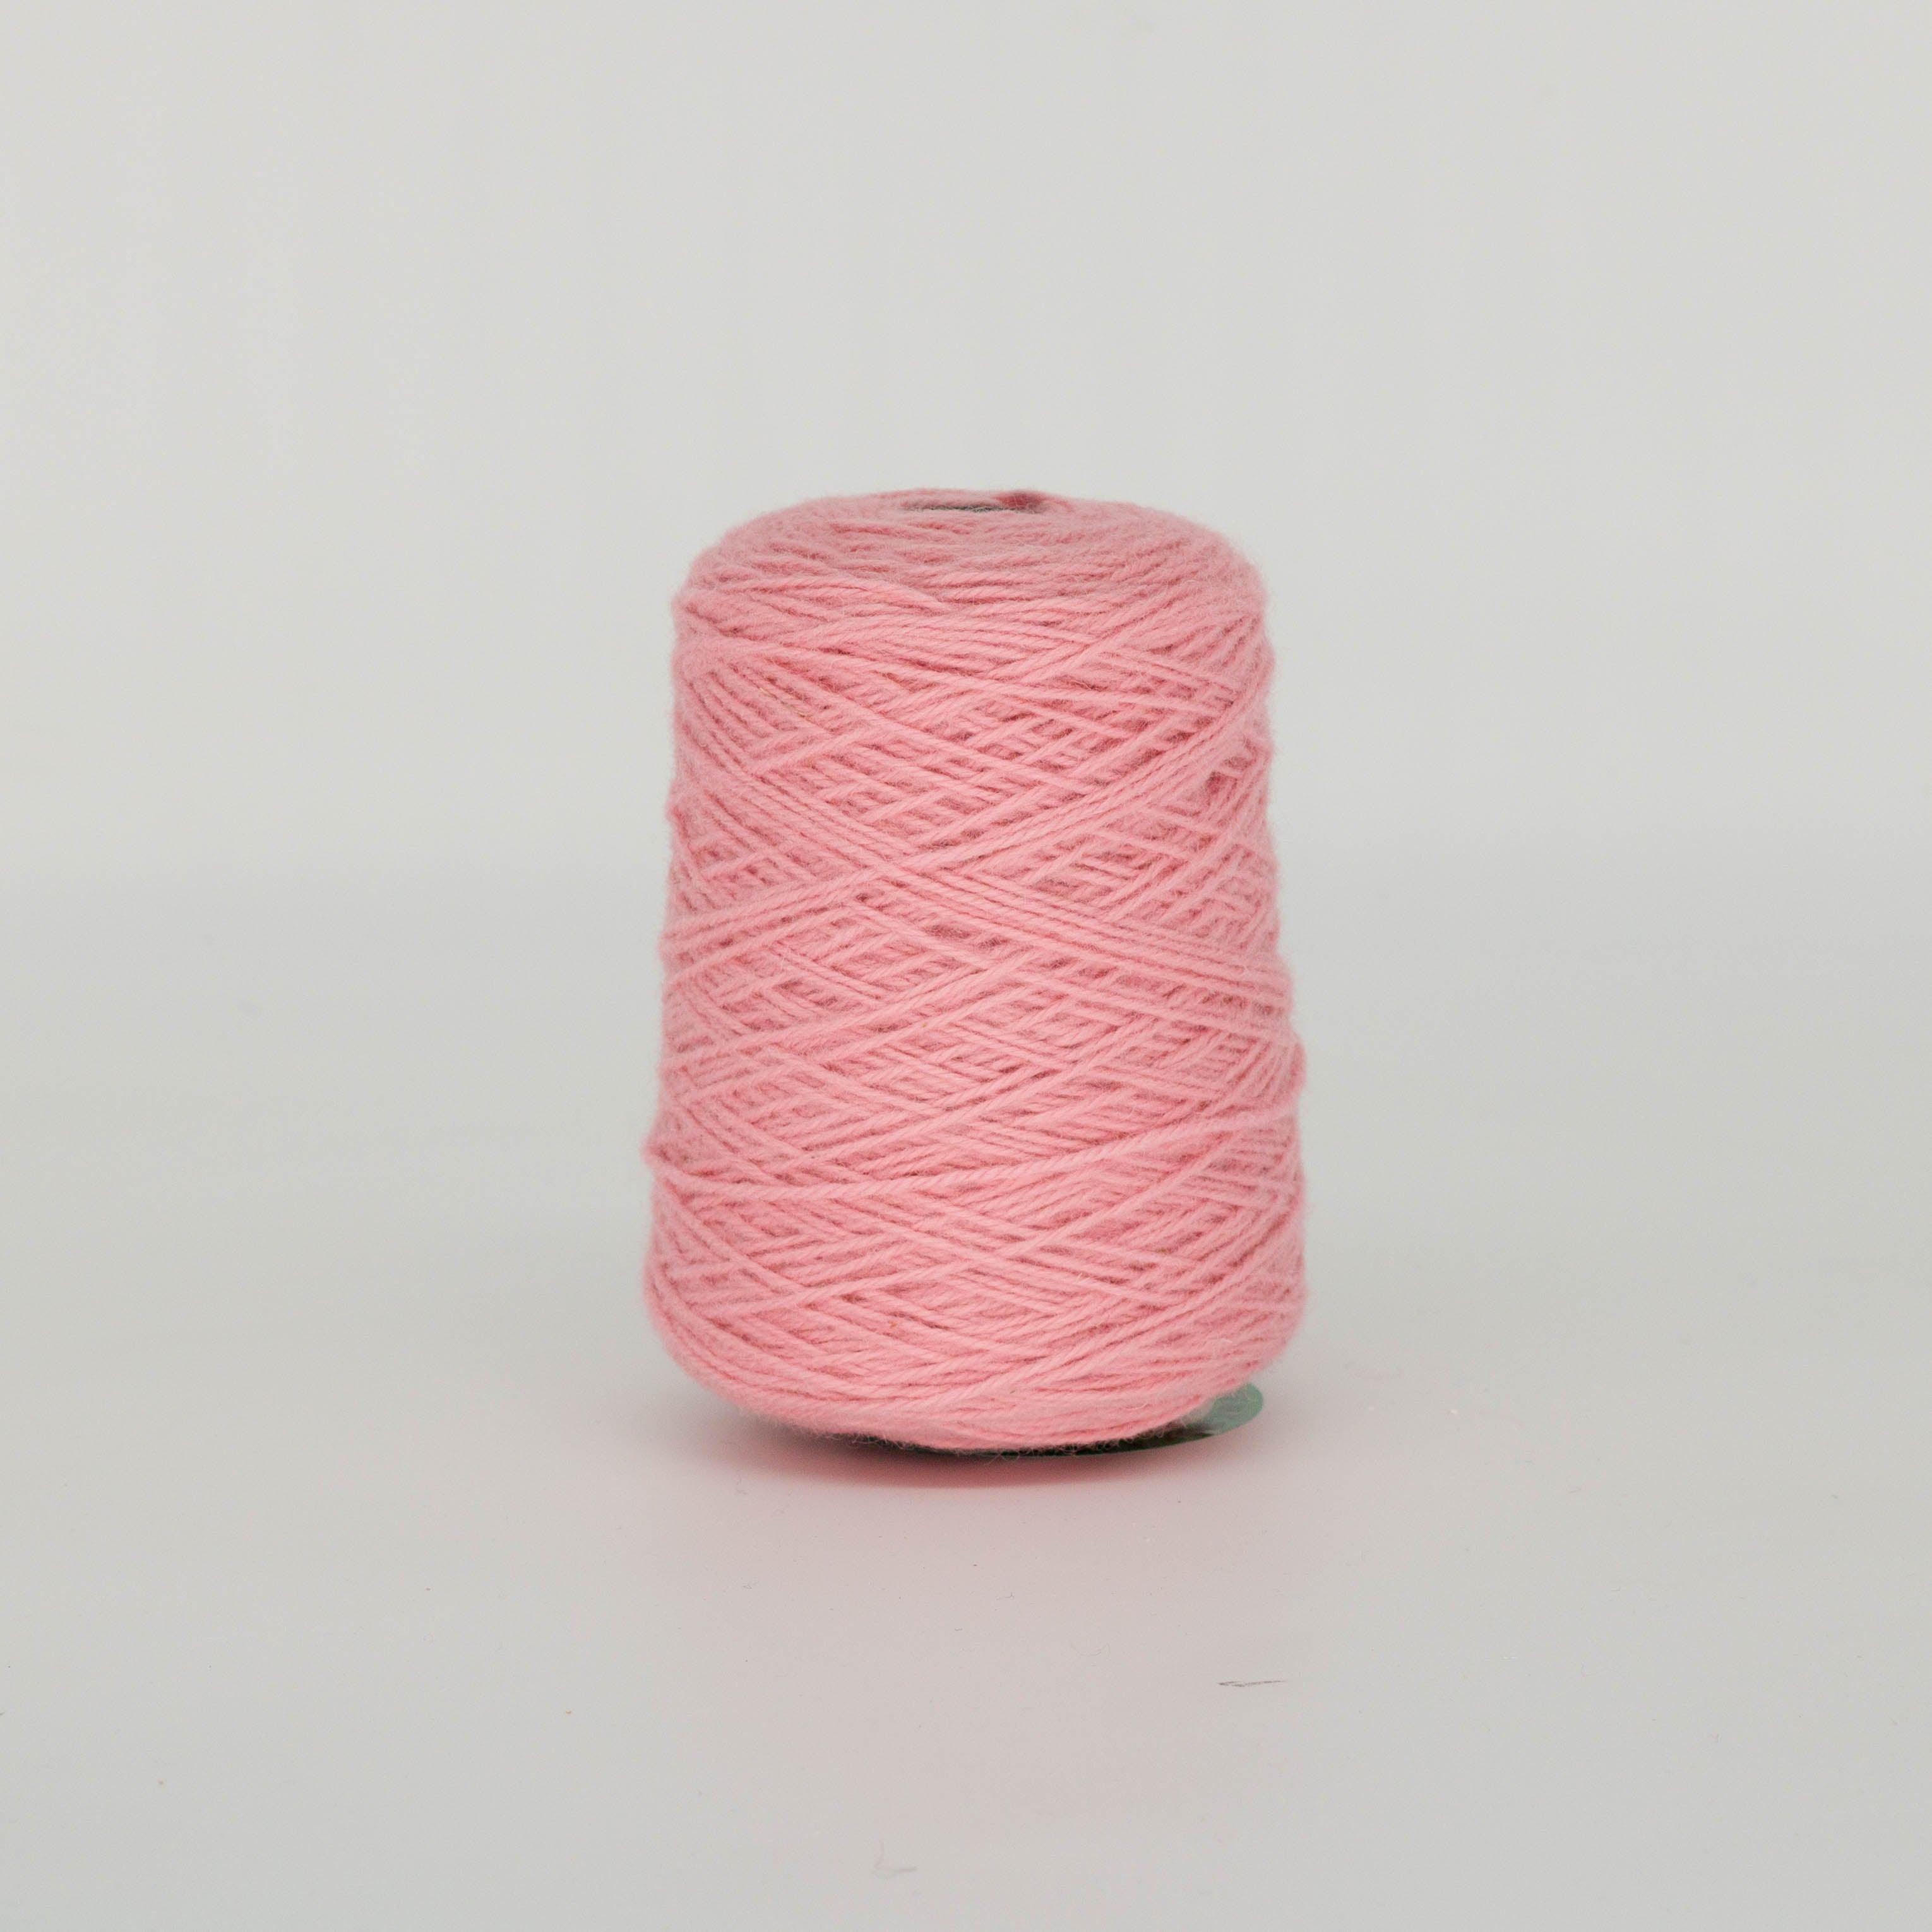 Shell pink 100% Wool Tufting Yarn On Cone (459)